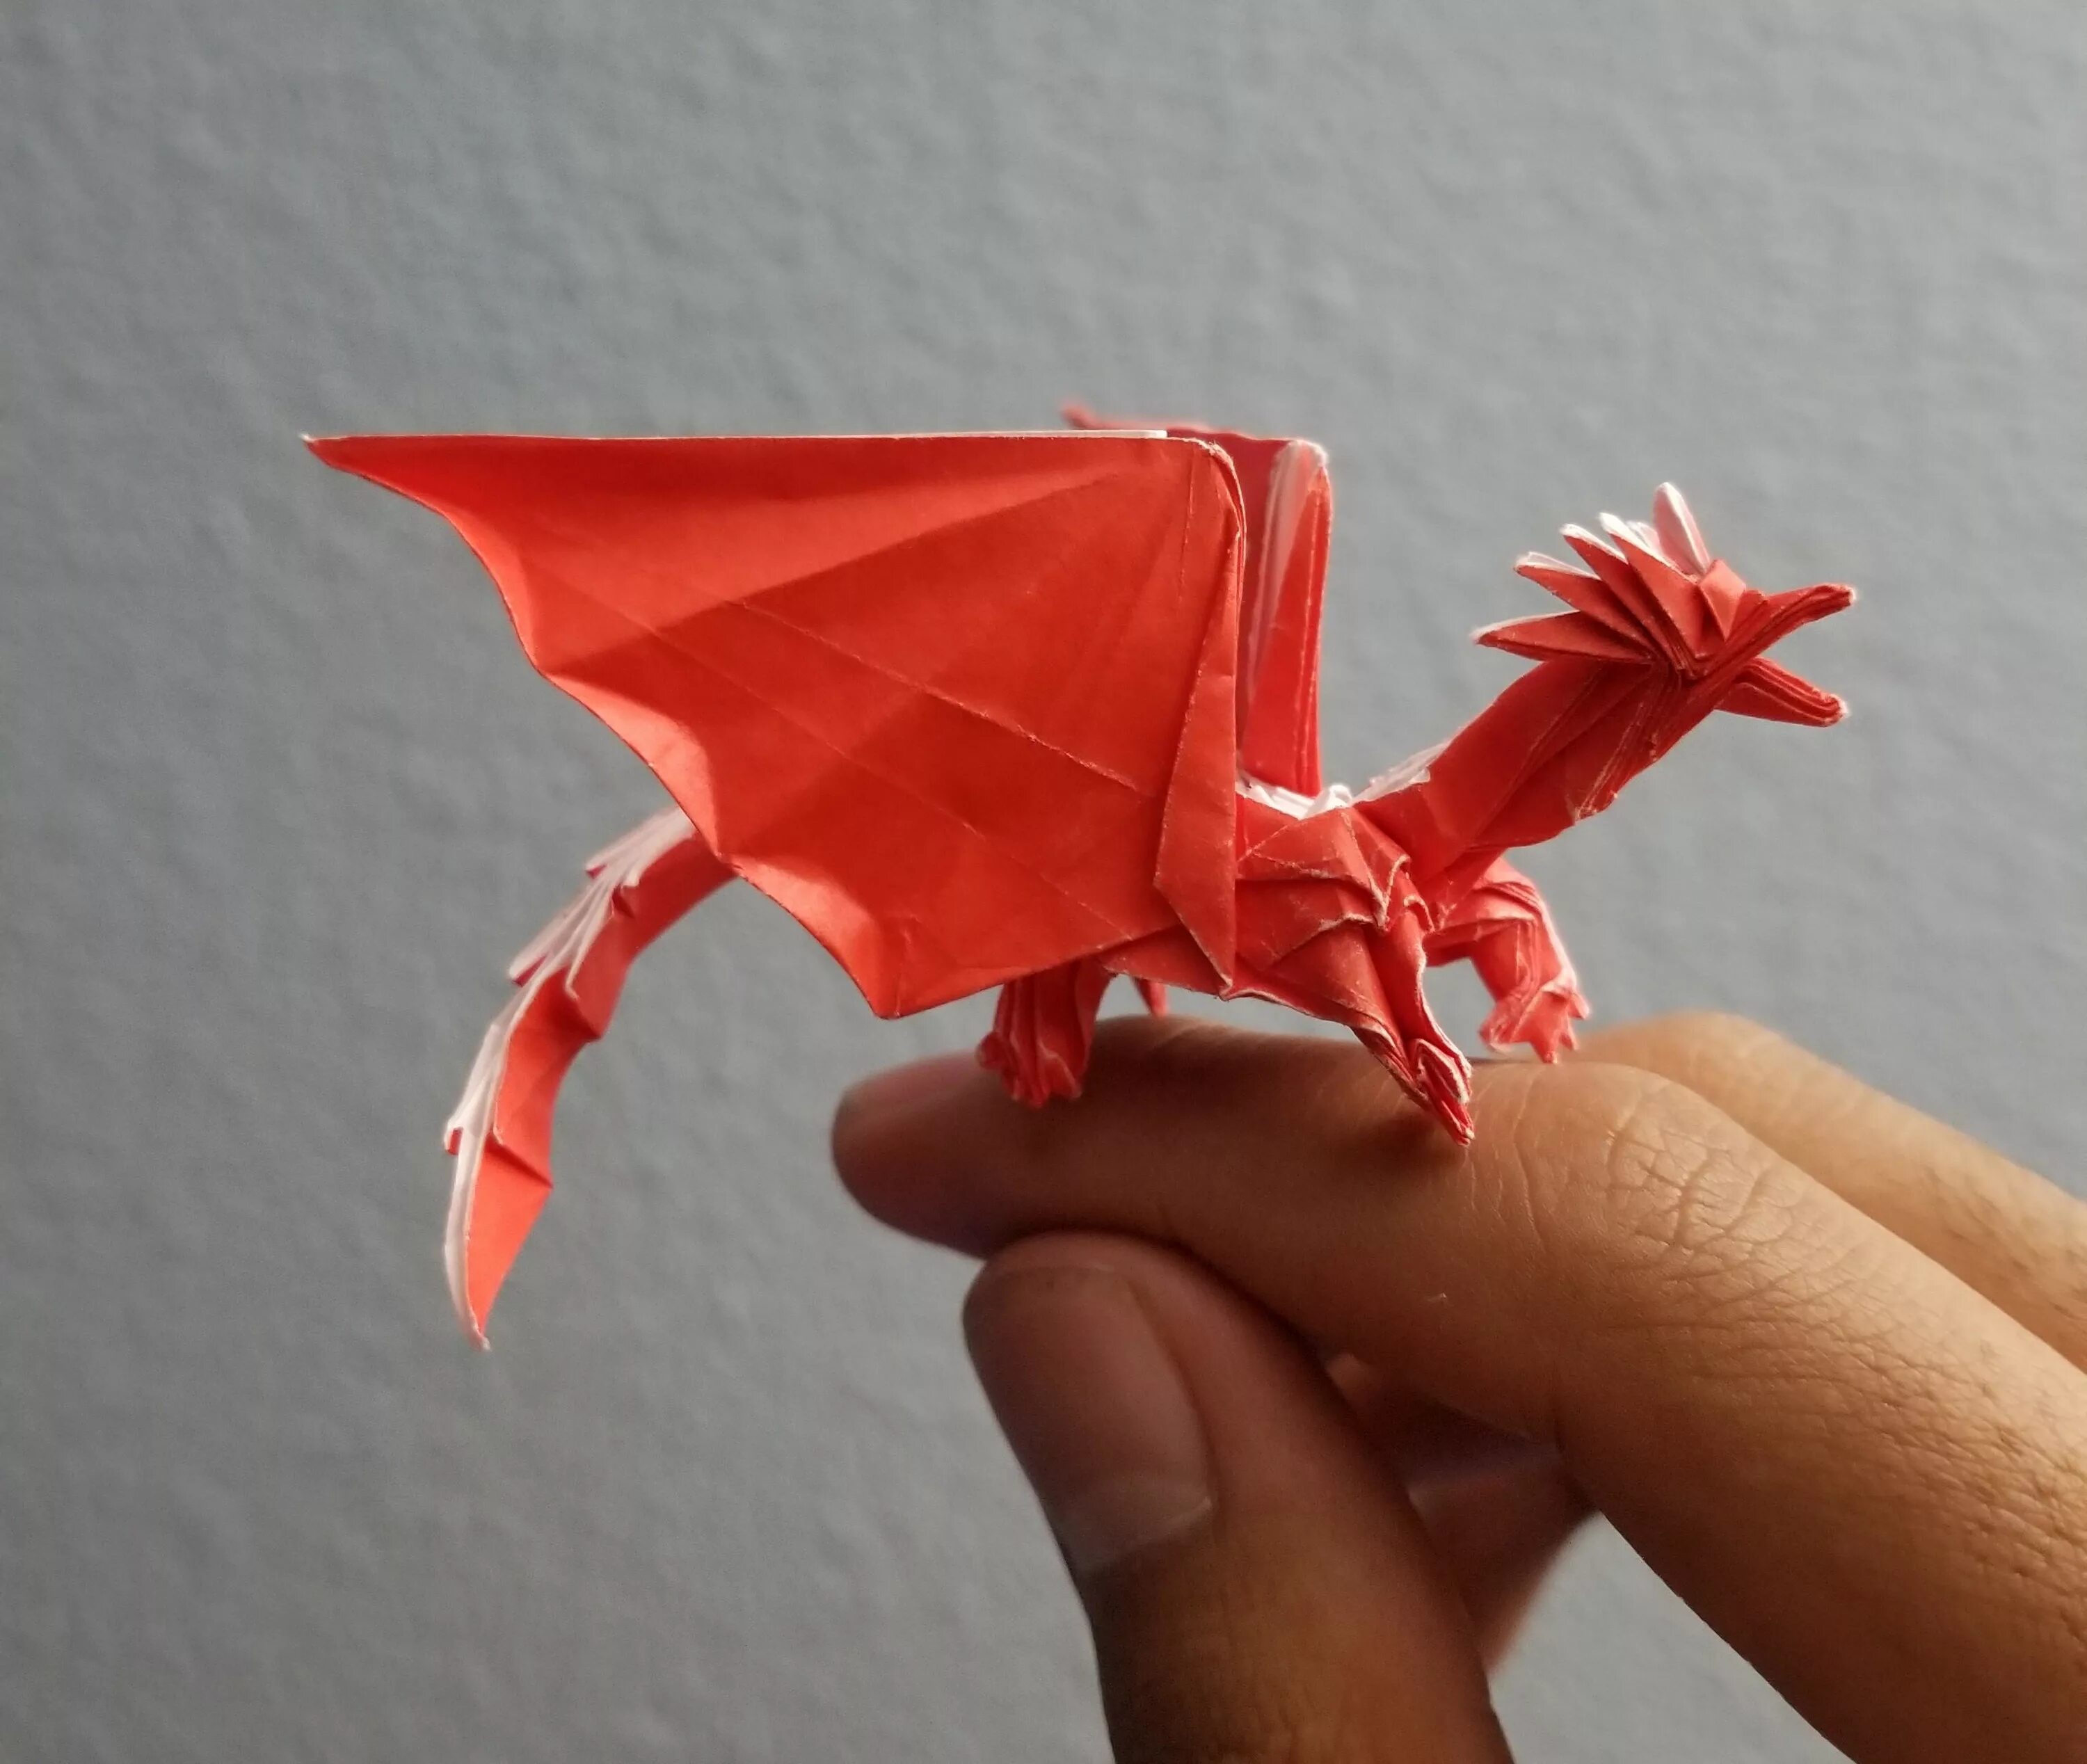 Дракон на палец из бумаги. Оригами дракон сатоши Камия. Дракон Корри оригами. Бумажные драконы на руку. Поделка дракон из бумаги.